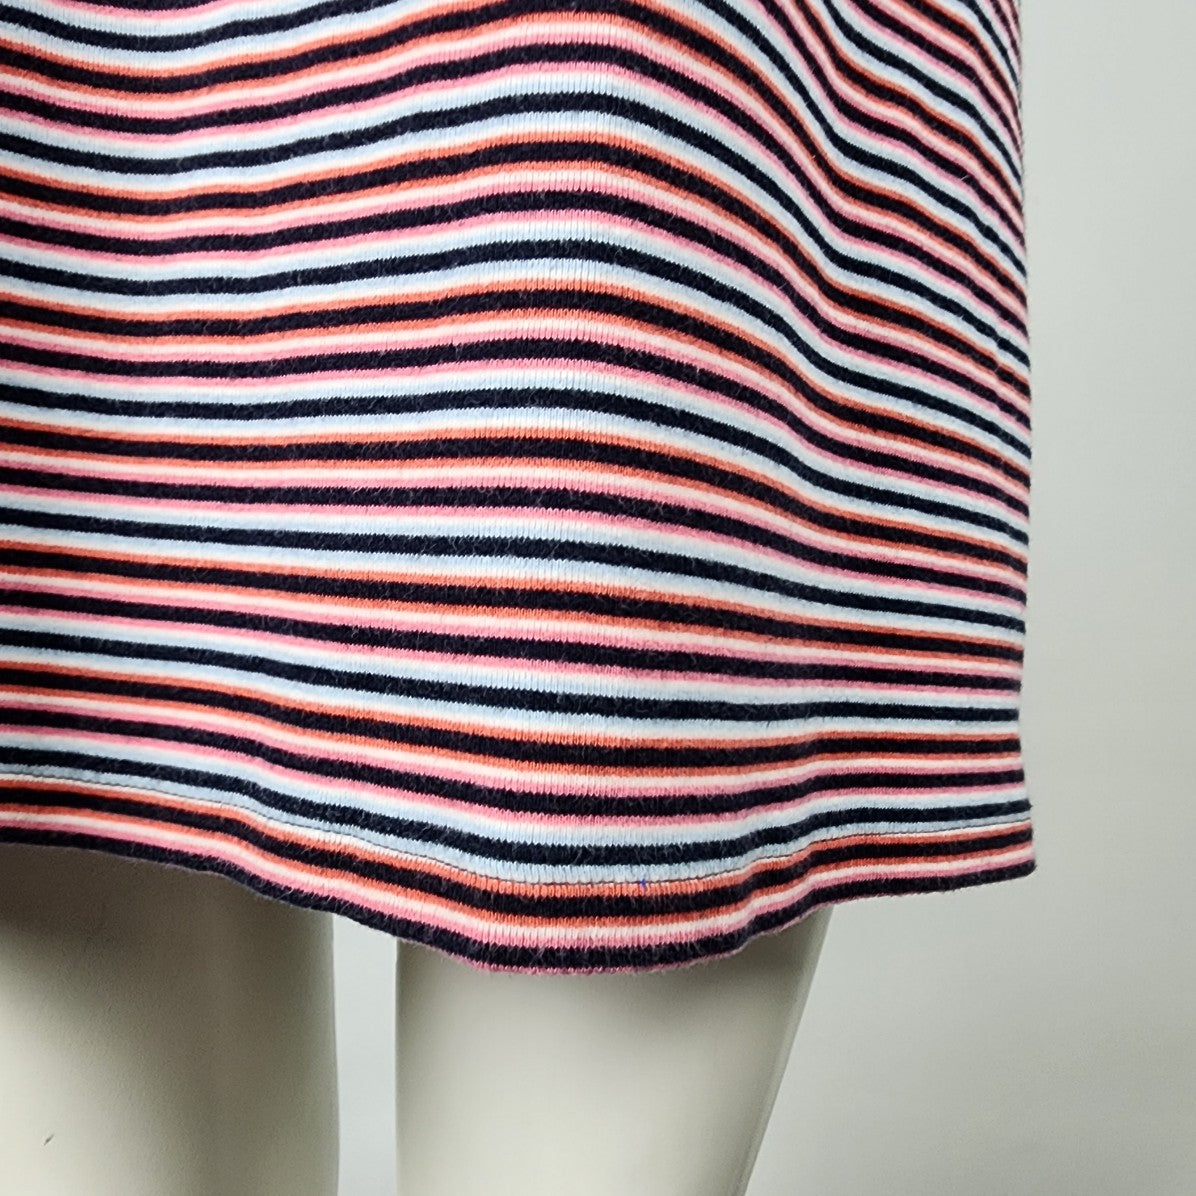 Tommy Hilfiger Red & Black Striped Shirt Dress Size XL